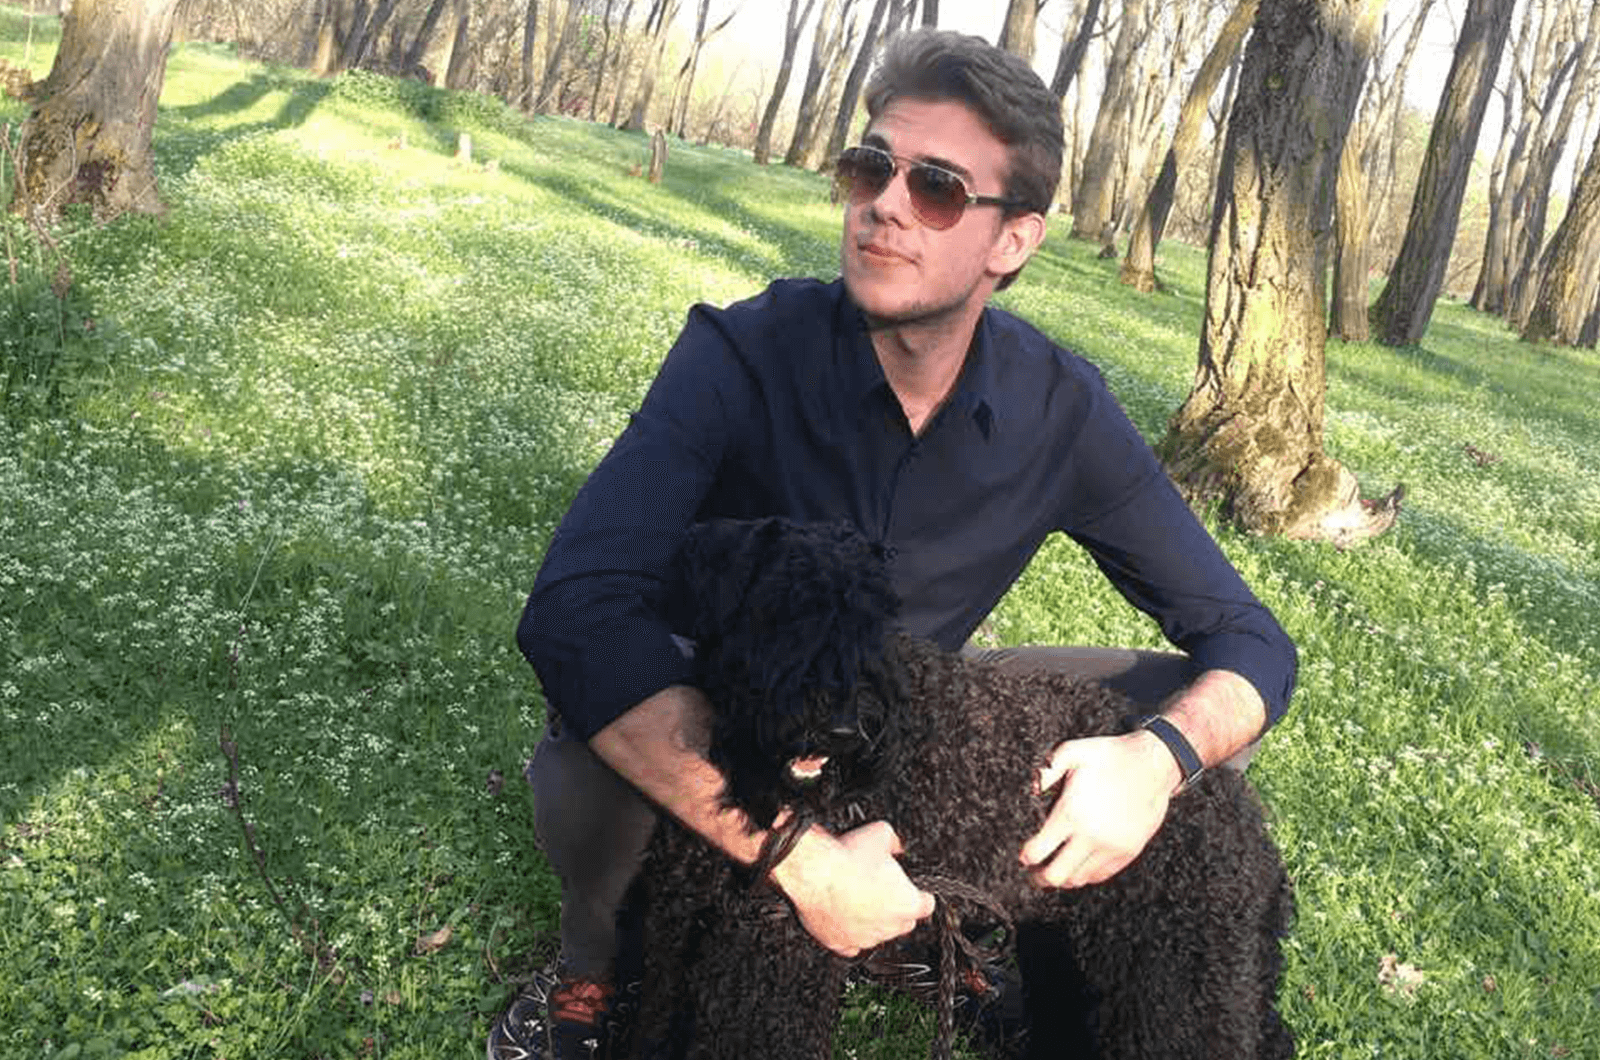 Toastmasters@AUBG Vice President Membership Stefan Solarski poses with his dog. 